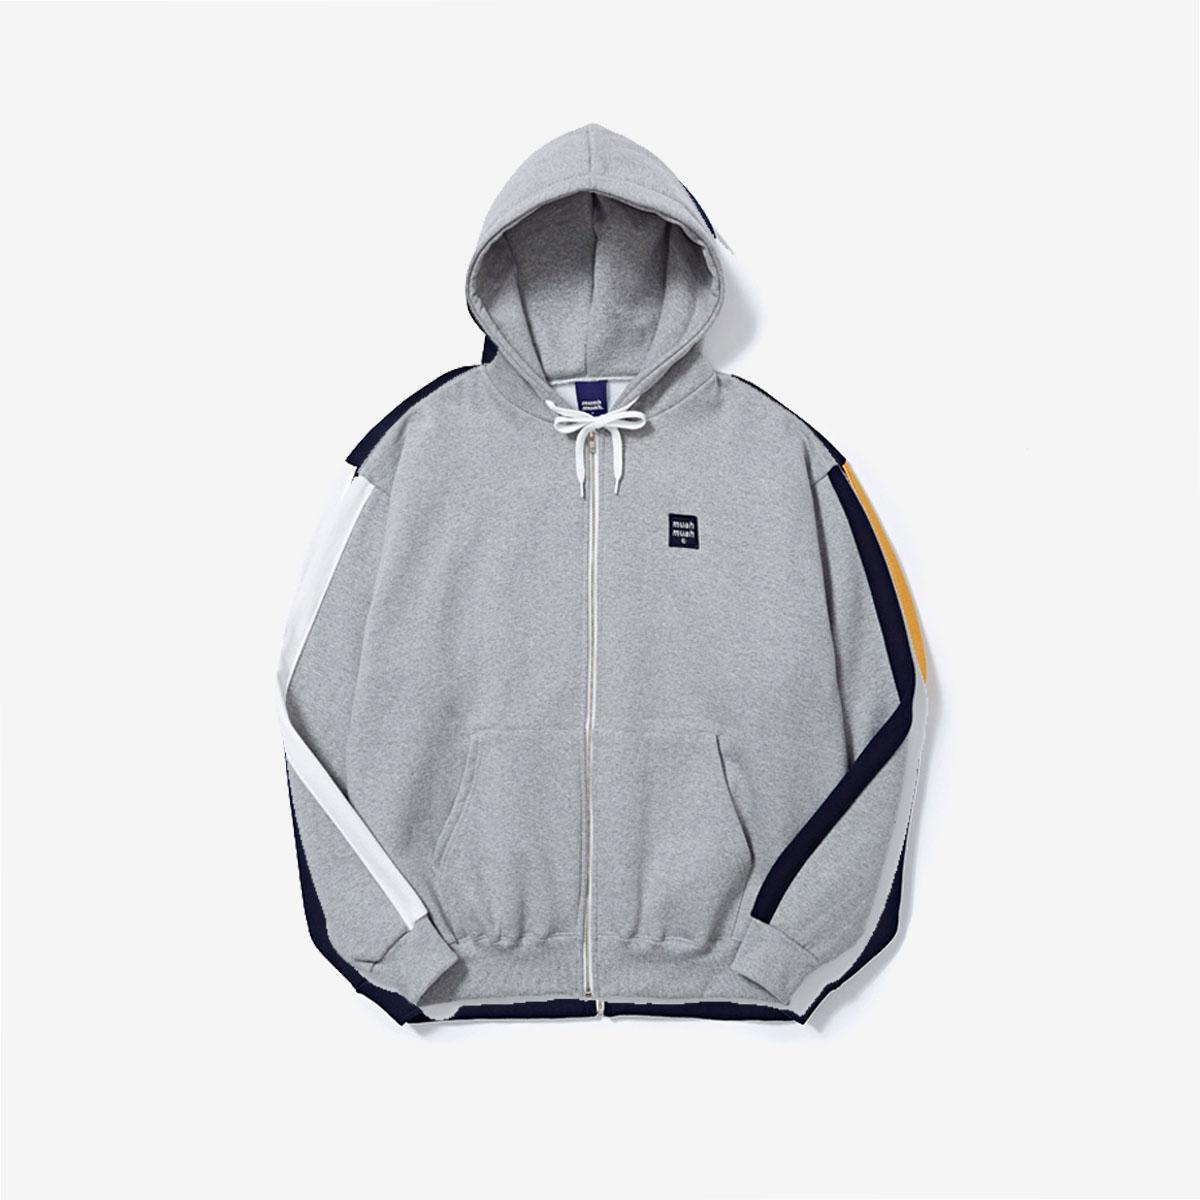 Korean brand muah muah signature combi hood zip up in gray front view 